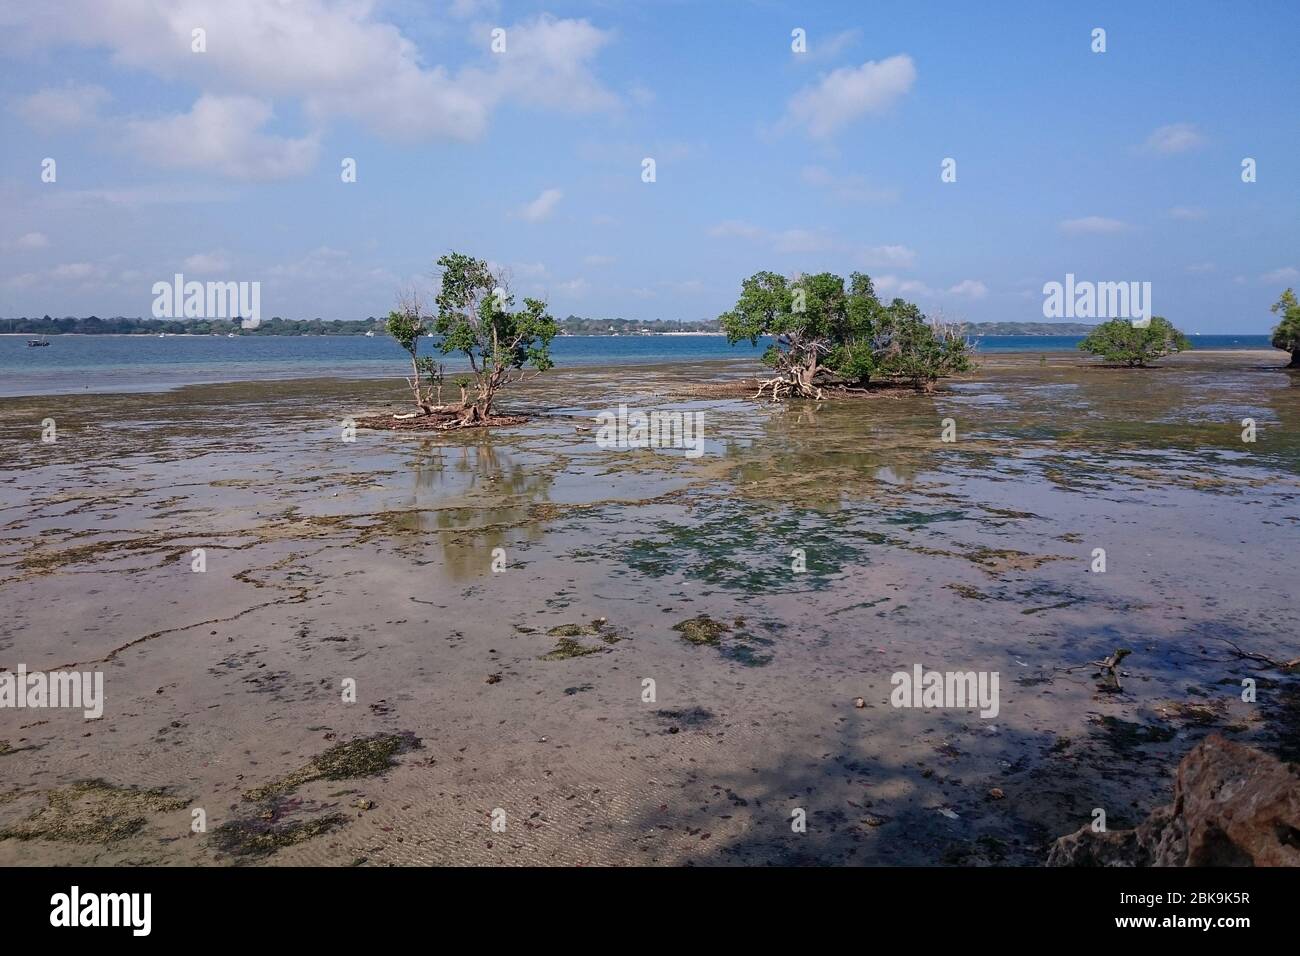 Mangrovenwald an der Küste des Kisite Mpunguti Marine Park, Mombasa, Kenia Stockfoto